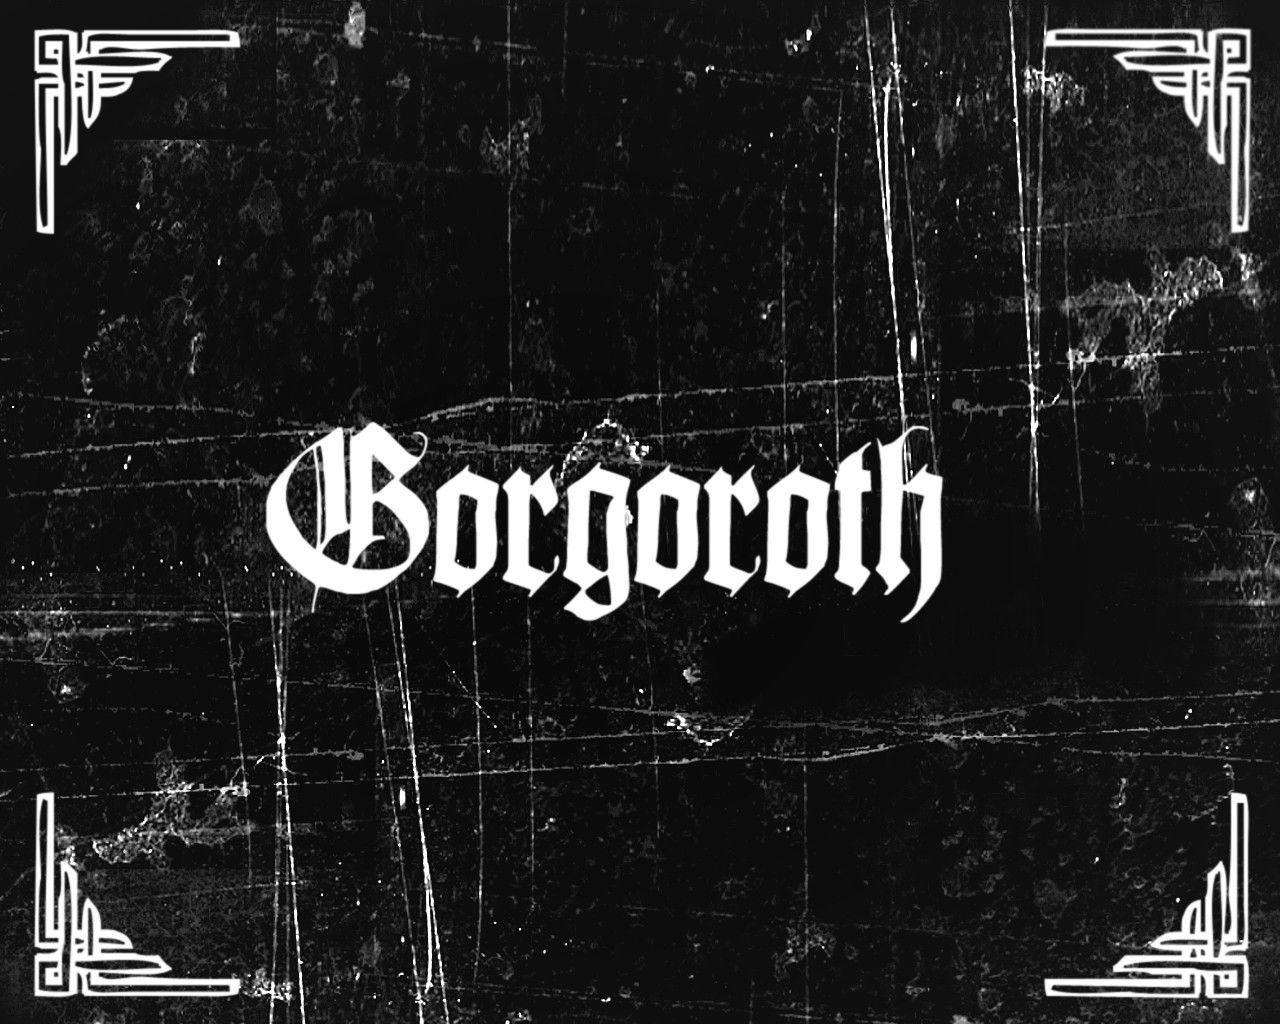 Gorgoroth grunge wallpaper